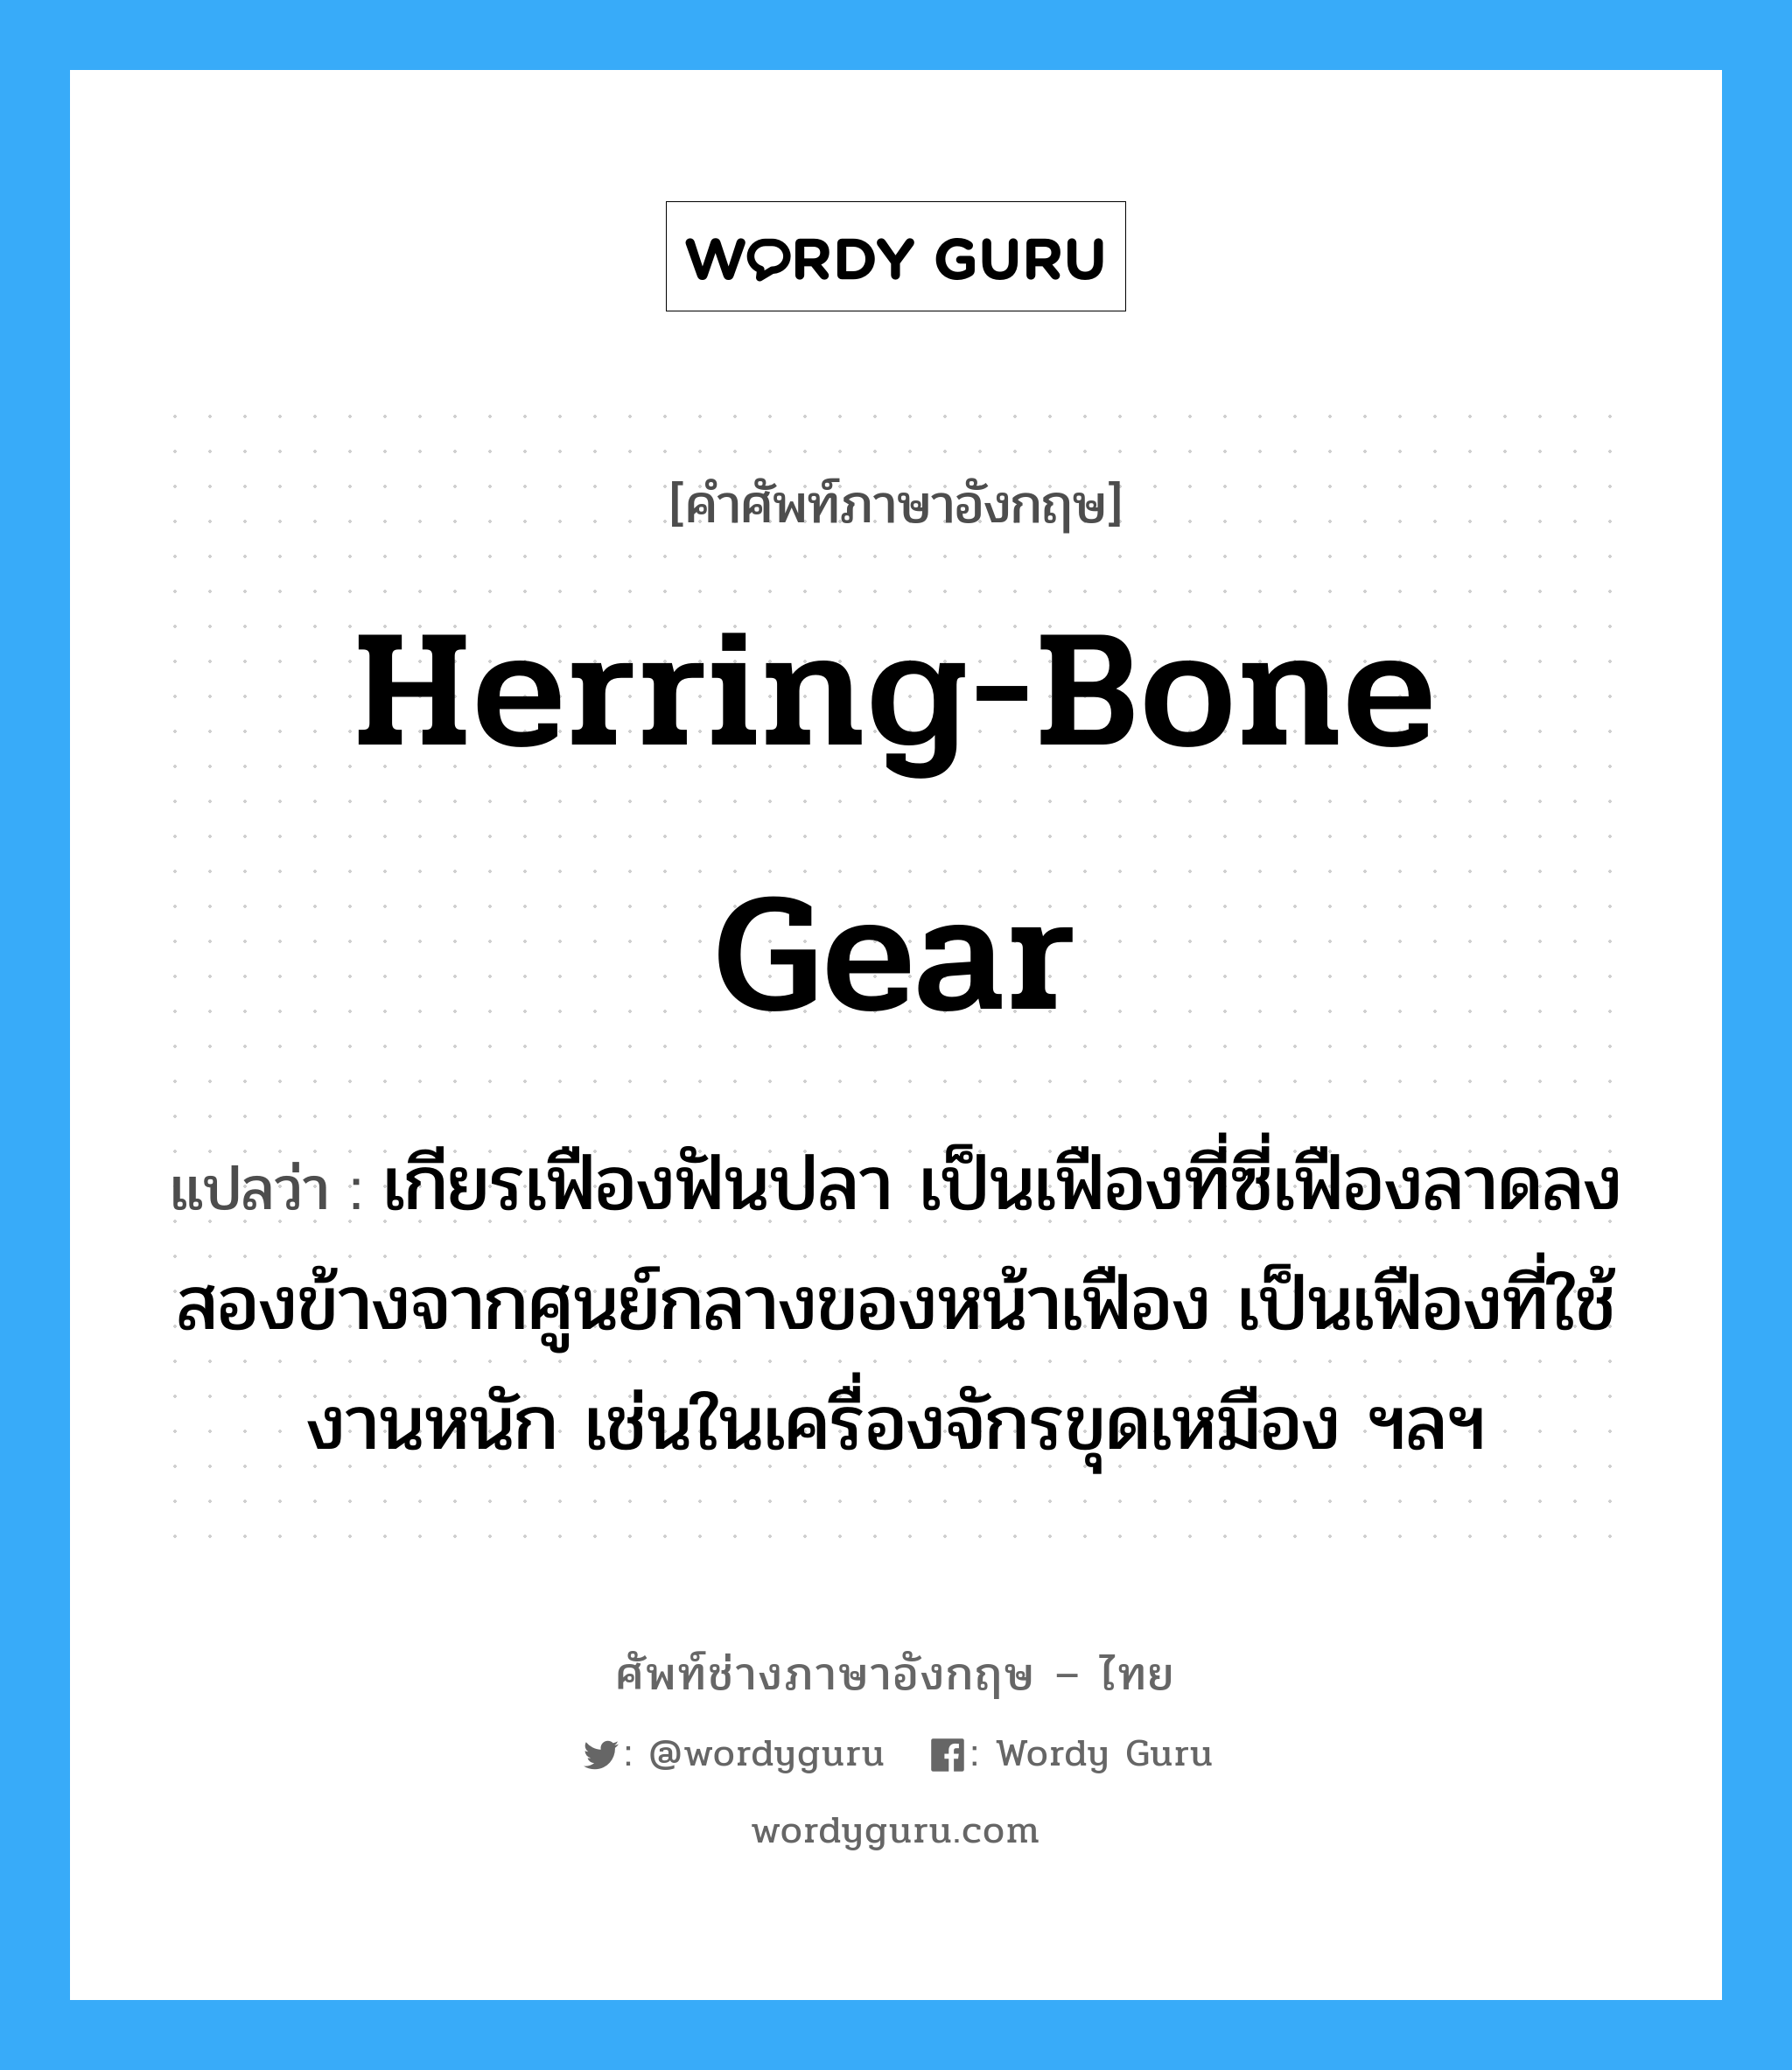 herring-bone gear แปลว่า?, คำศัพท์ช่างภาษาอังกฤษ - ไทย herring-bone gear คำศัพท์ภาษาอังกฤษ herring-bone gear แปลว่า เกียรเฟืองฟันปลา เป็นเฟืองที่ซี่เฟืองลาดลง สองข้างจากศูนย์กลางของหน้าเฟือง เป็นเฟืองที่ใช้งานหนัก เช่นในเครื่องจักรขุดเหมือง ฯลฯ